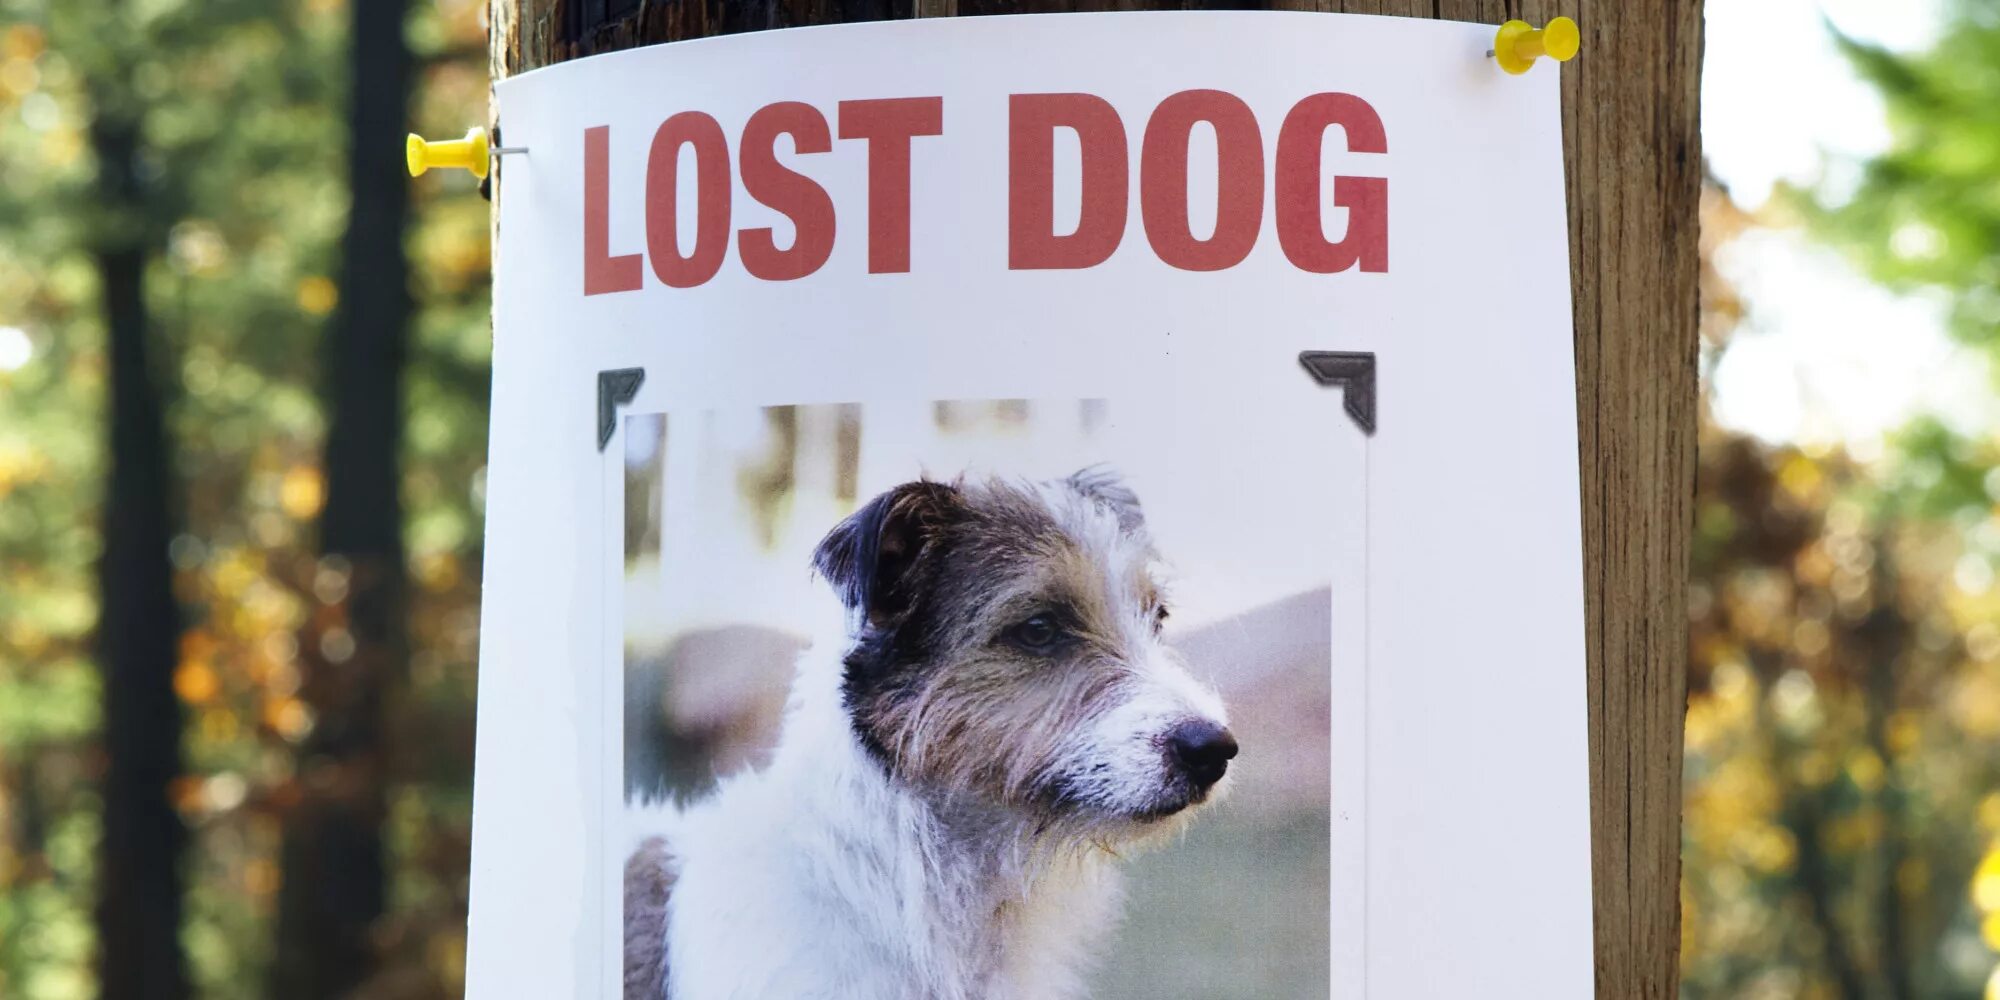 The Lost Dog. Missing Dog. Потерявшаяся домашняя собака.